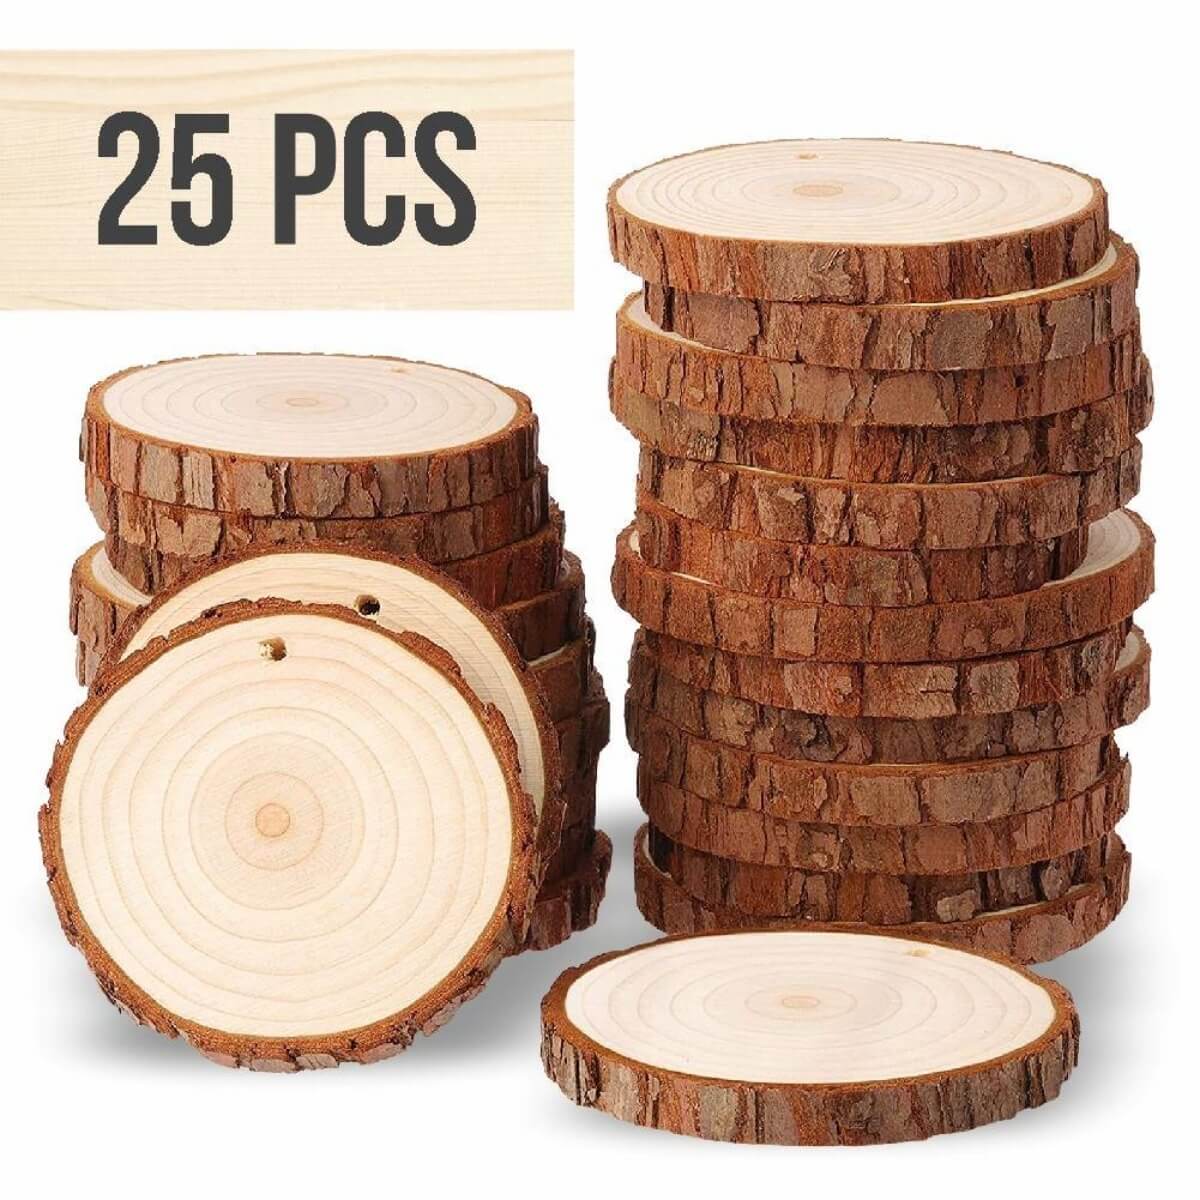 Wood Slices - Set of 25 tree slices & wood discs